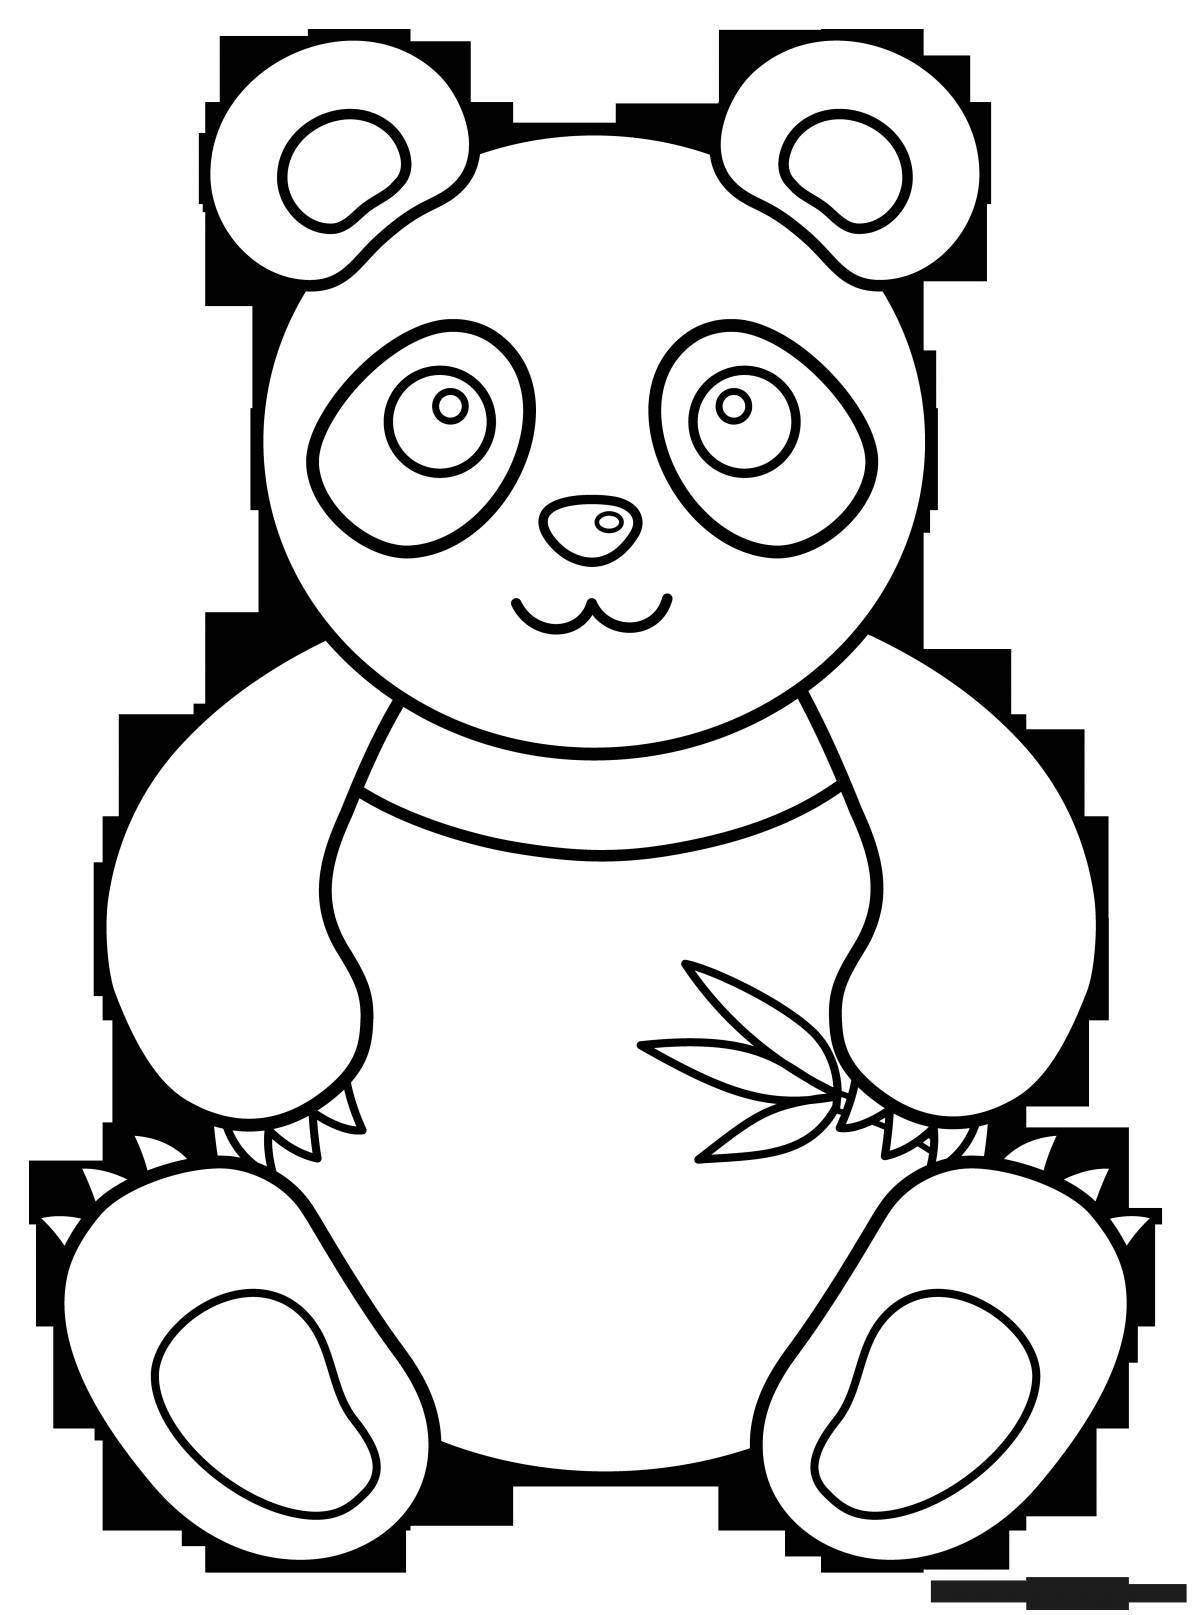 Playful panda coloring book for kids